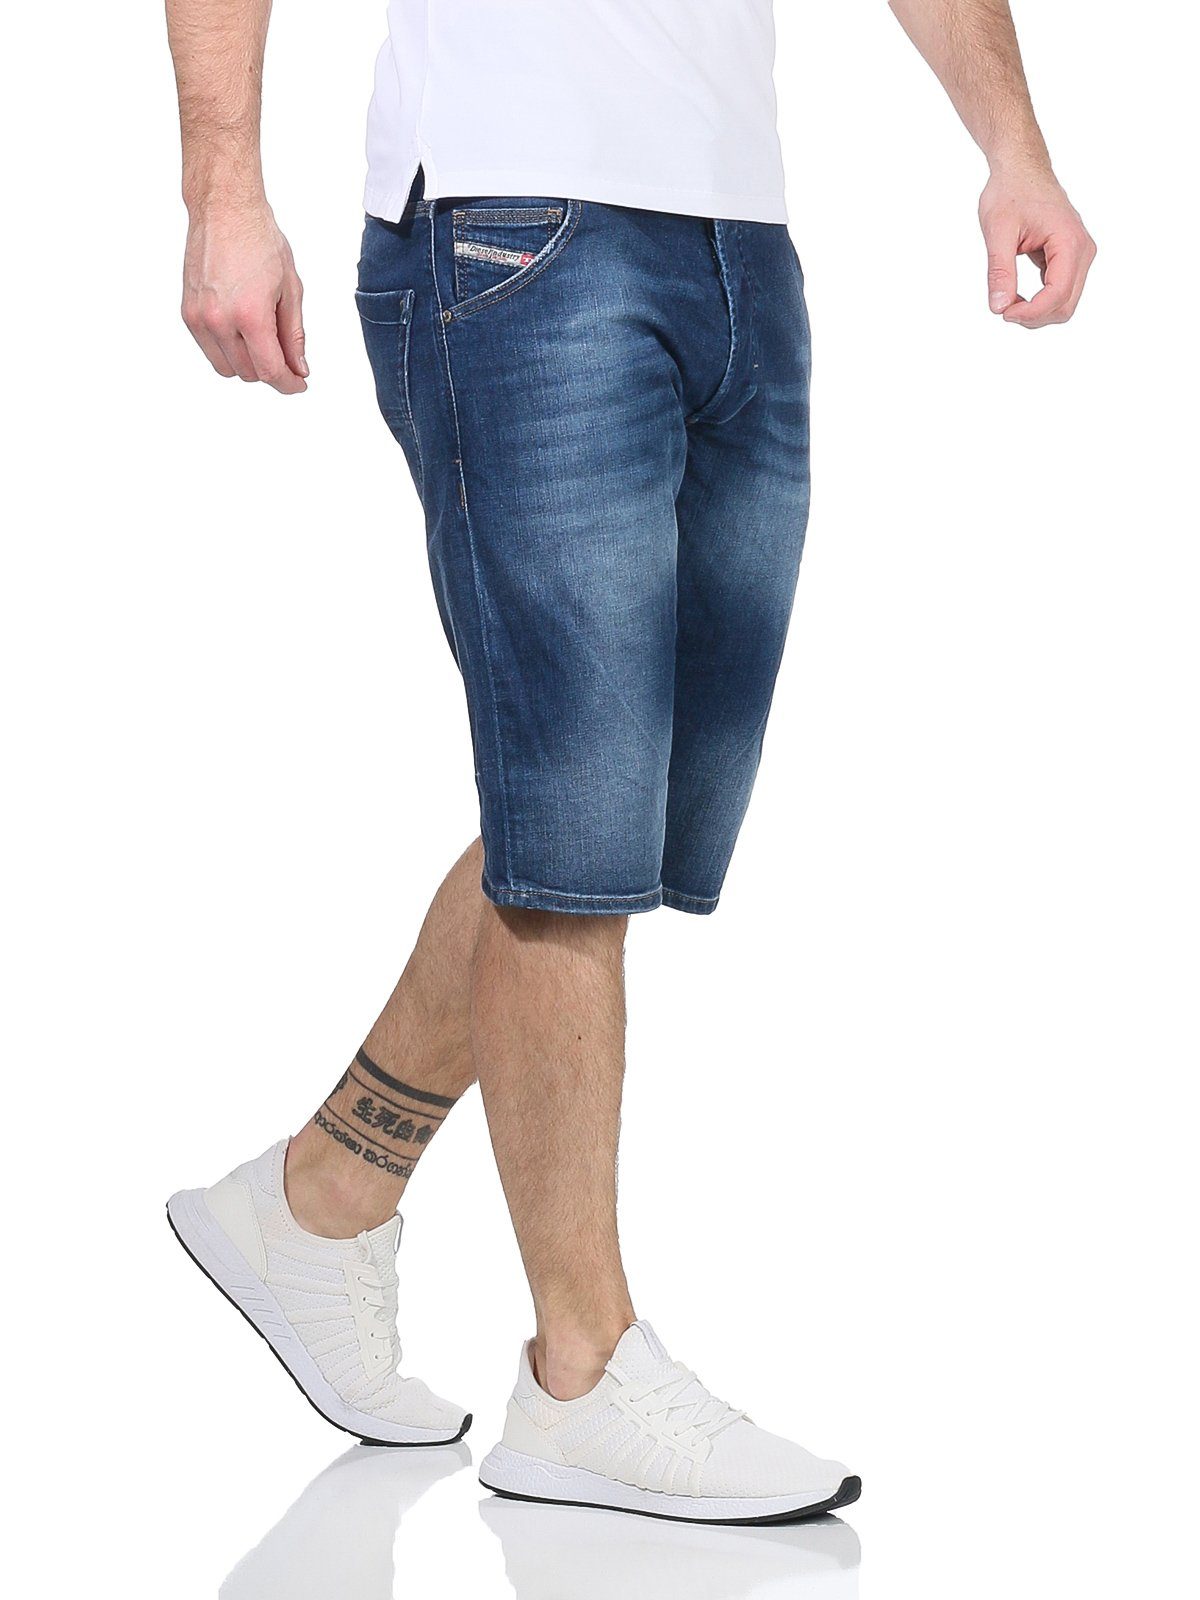 Diesel Jeansshorts Herren Jeans Kroshort kurze RG48R Used-Look Shorts Blau dezenter RG48R Hose Shorts